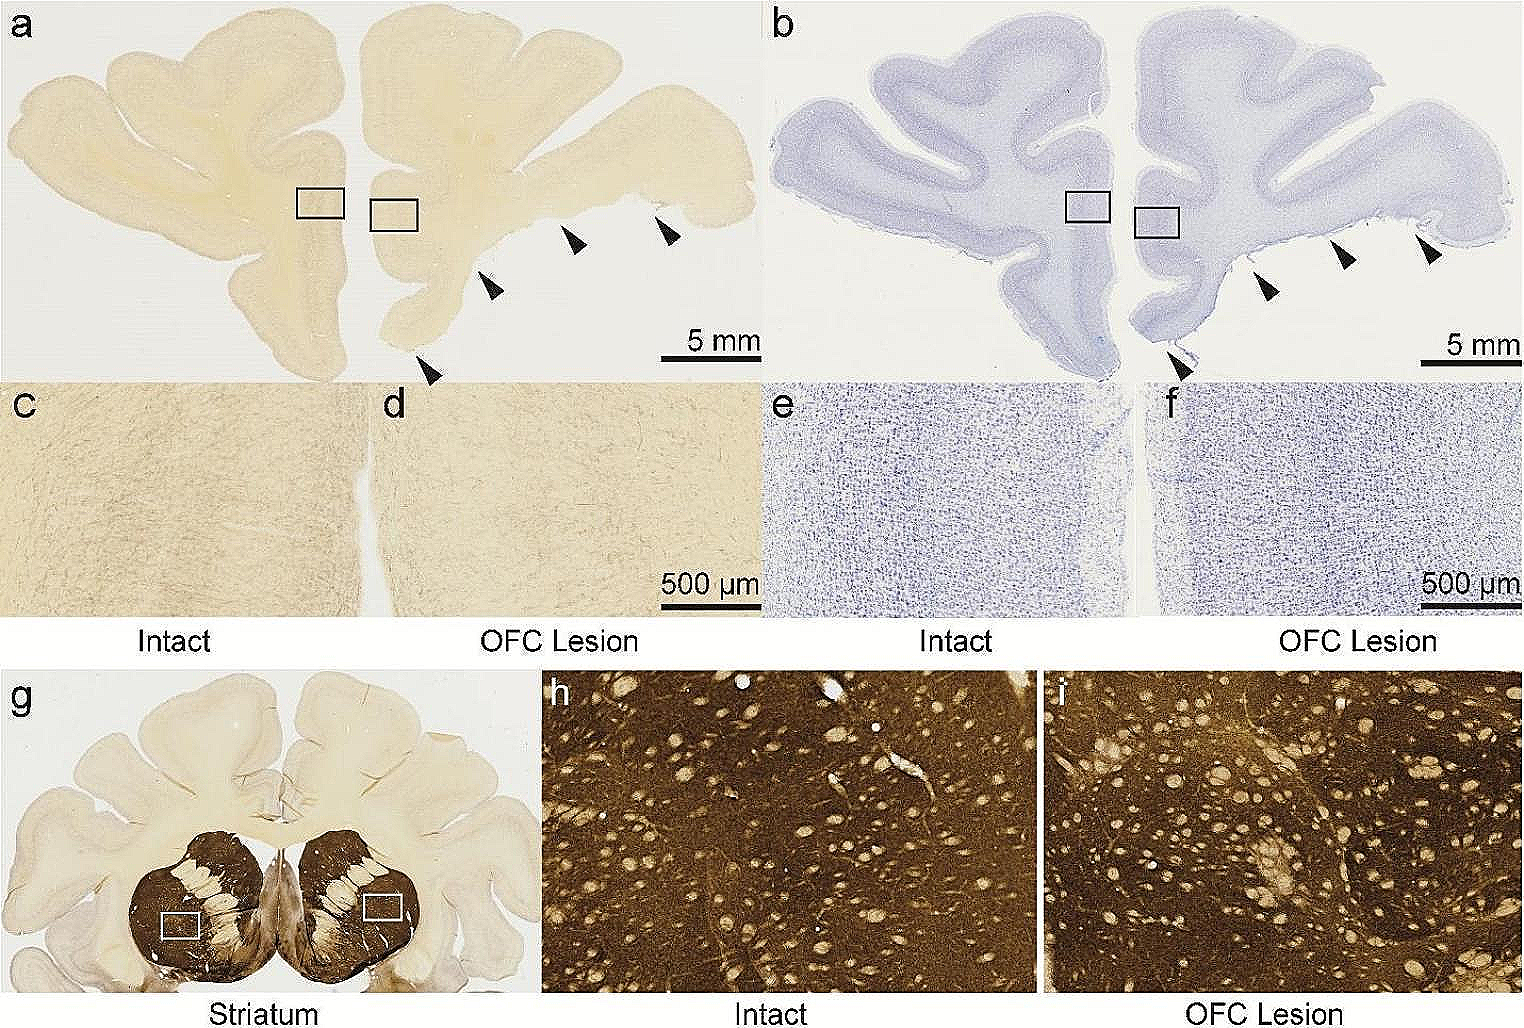 Aspiration removal of orbitofrontal cortex disrupts cholinergic fibers of passage to anterior cingulate cortex in rhesus macaques